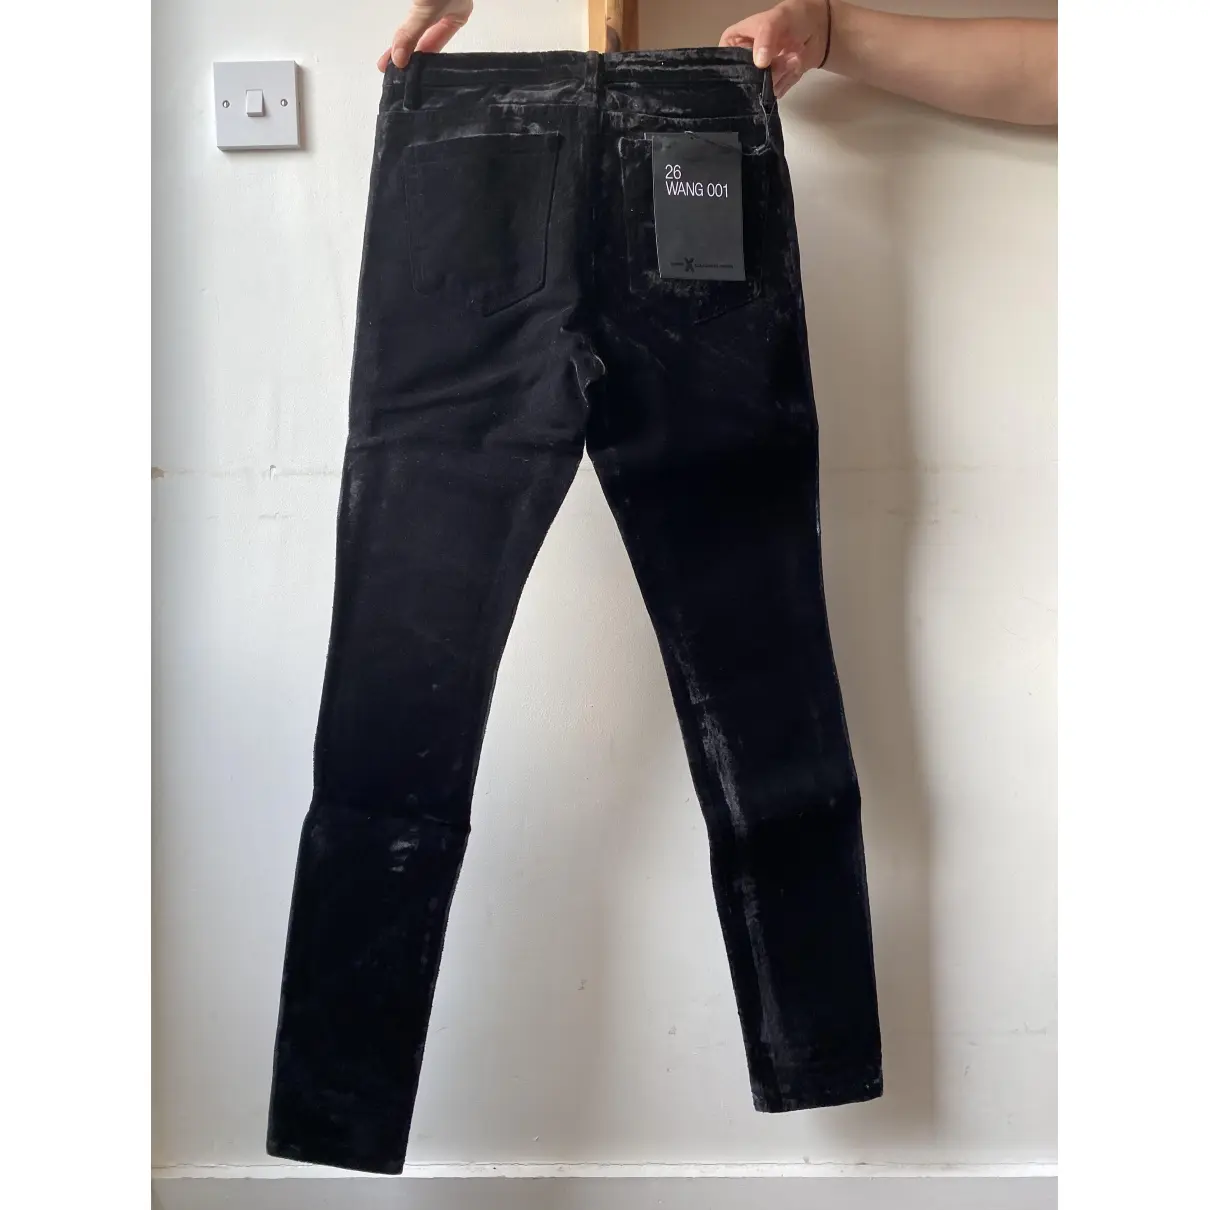 Alexander Wang Slim jeans for sale